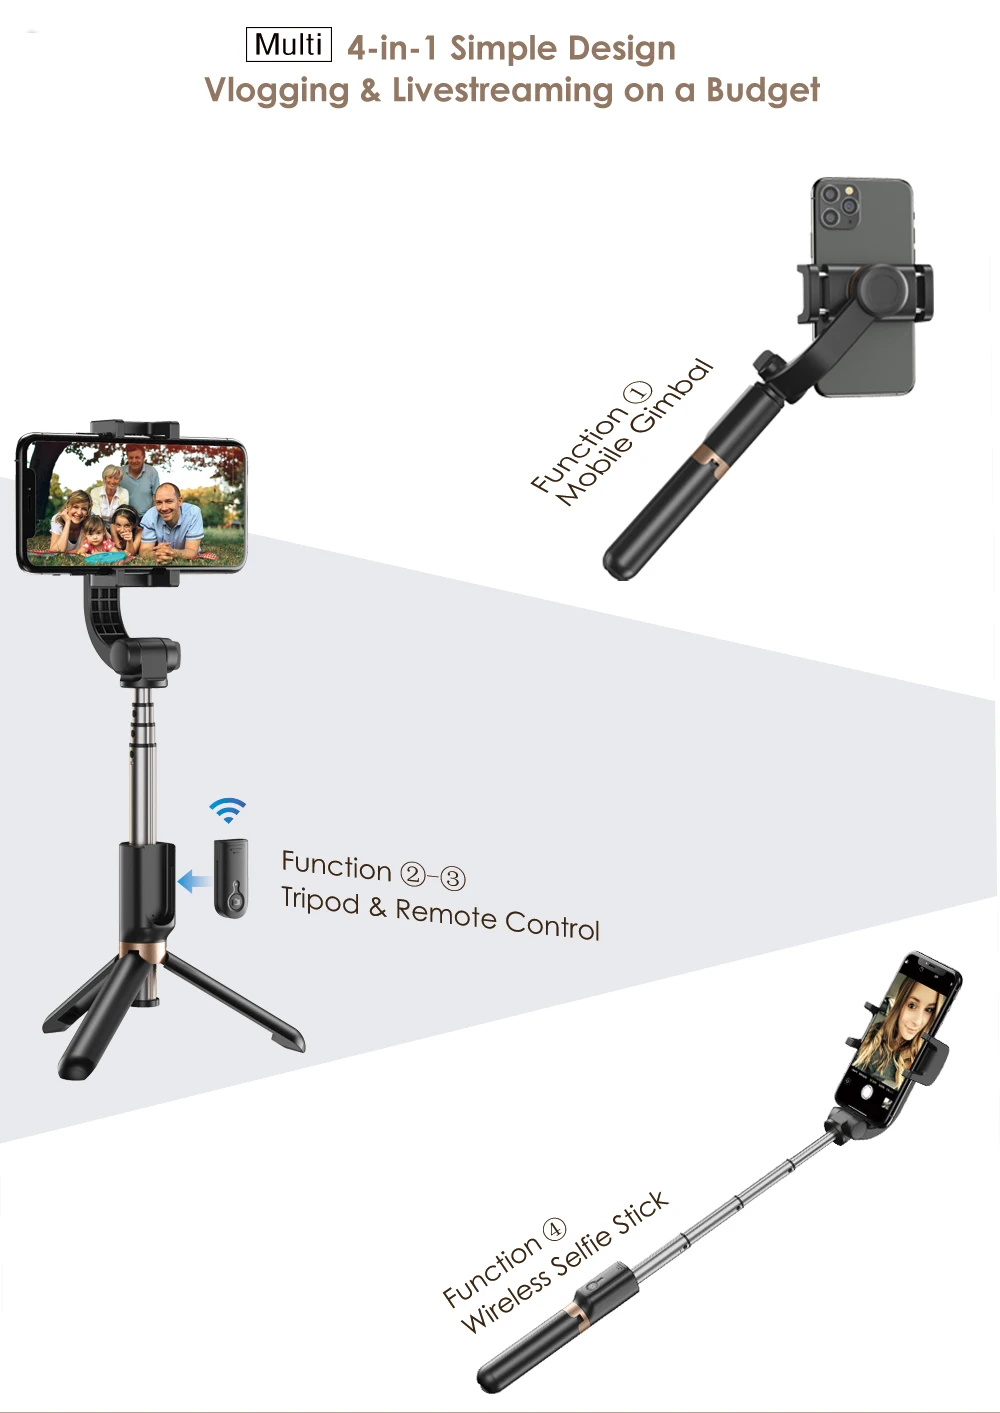 APEXEL 2020 New design handheld single axis mobile gimbal stabilizer,vlogging kit selfie stick tripod gimbal for smartphone